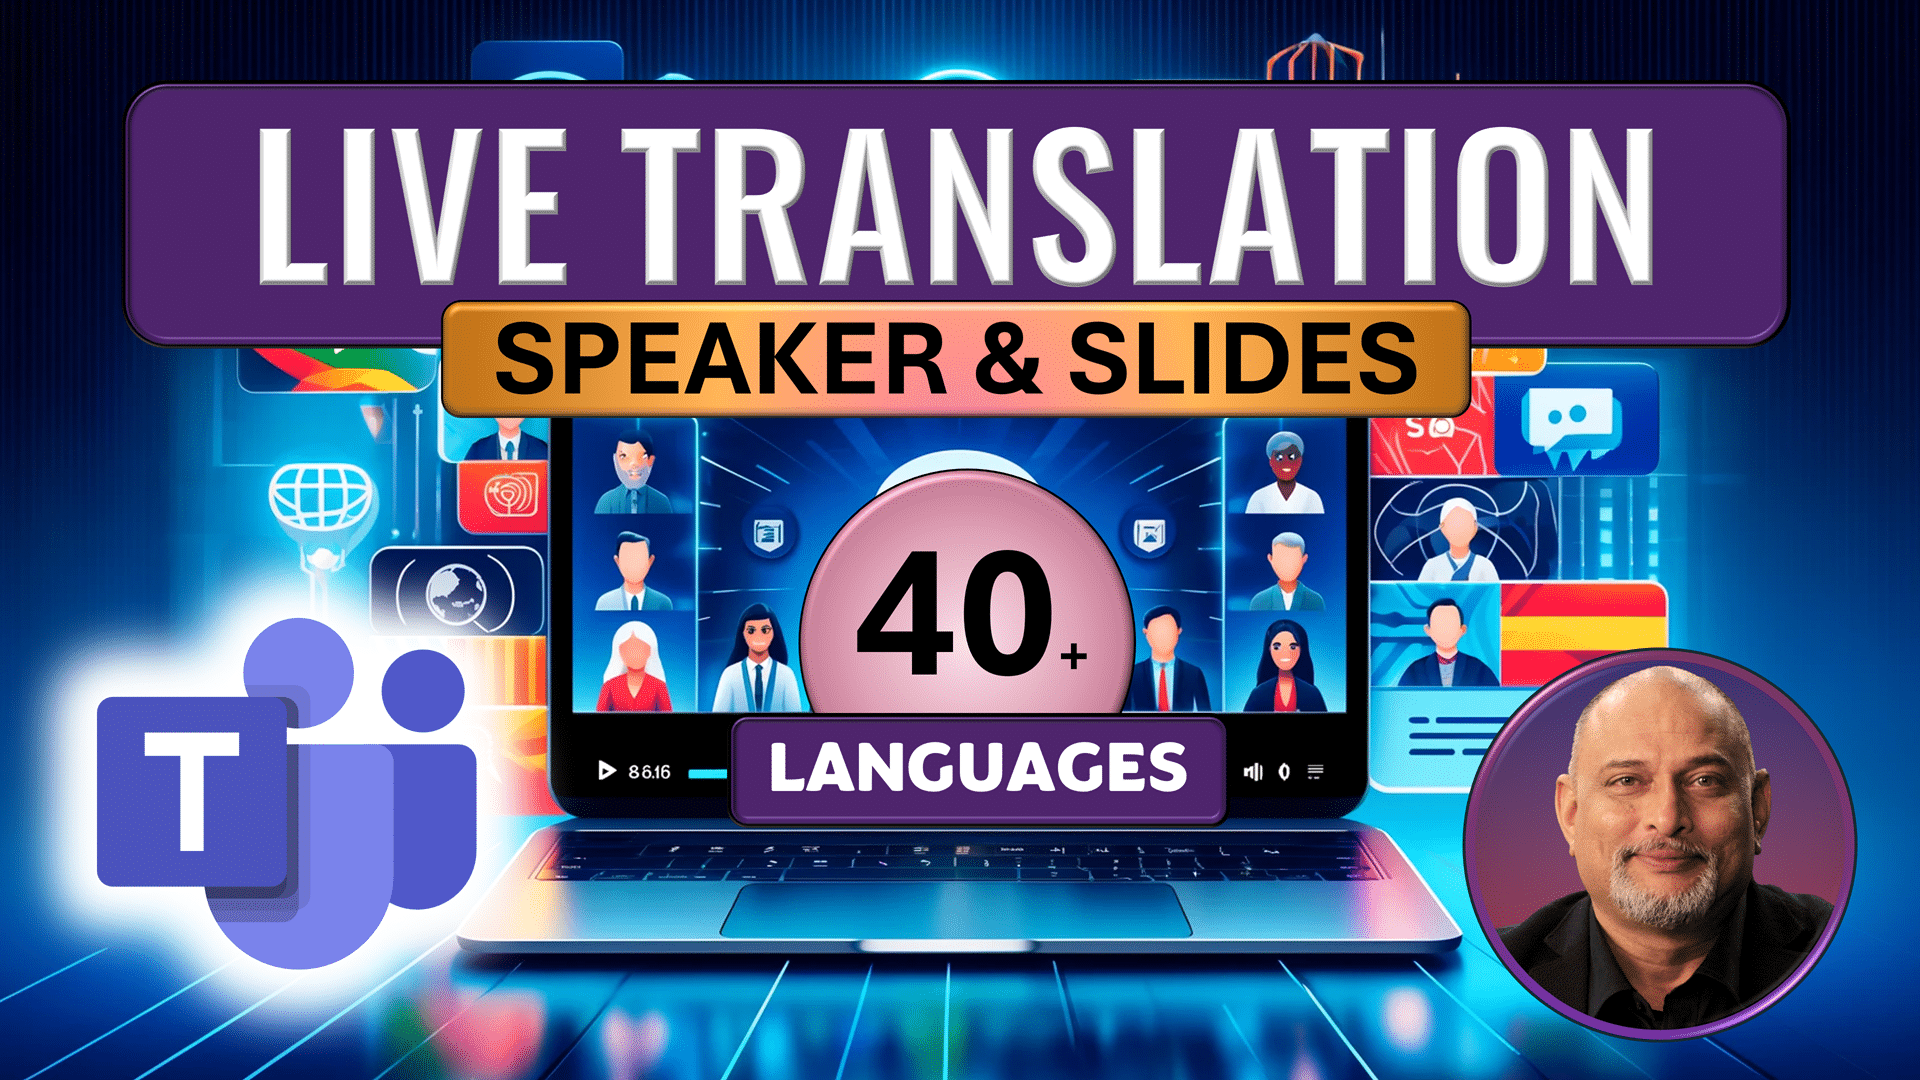 Inclusive Teams Meeting – Live Translation 40 languages